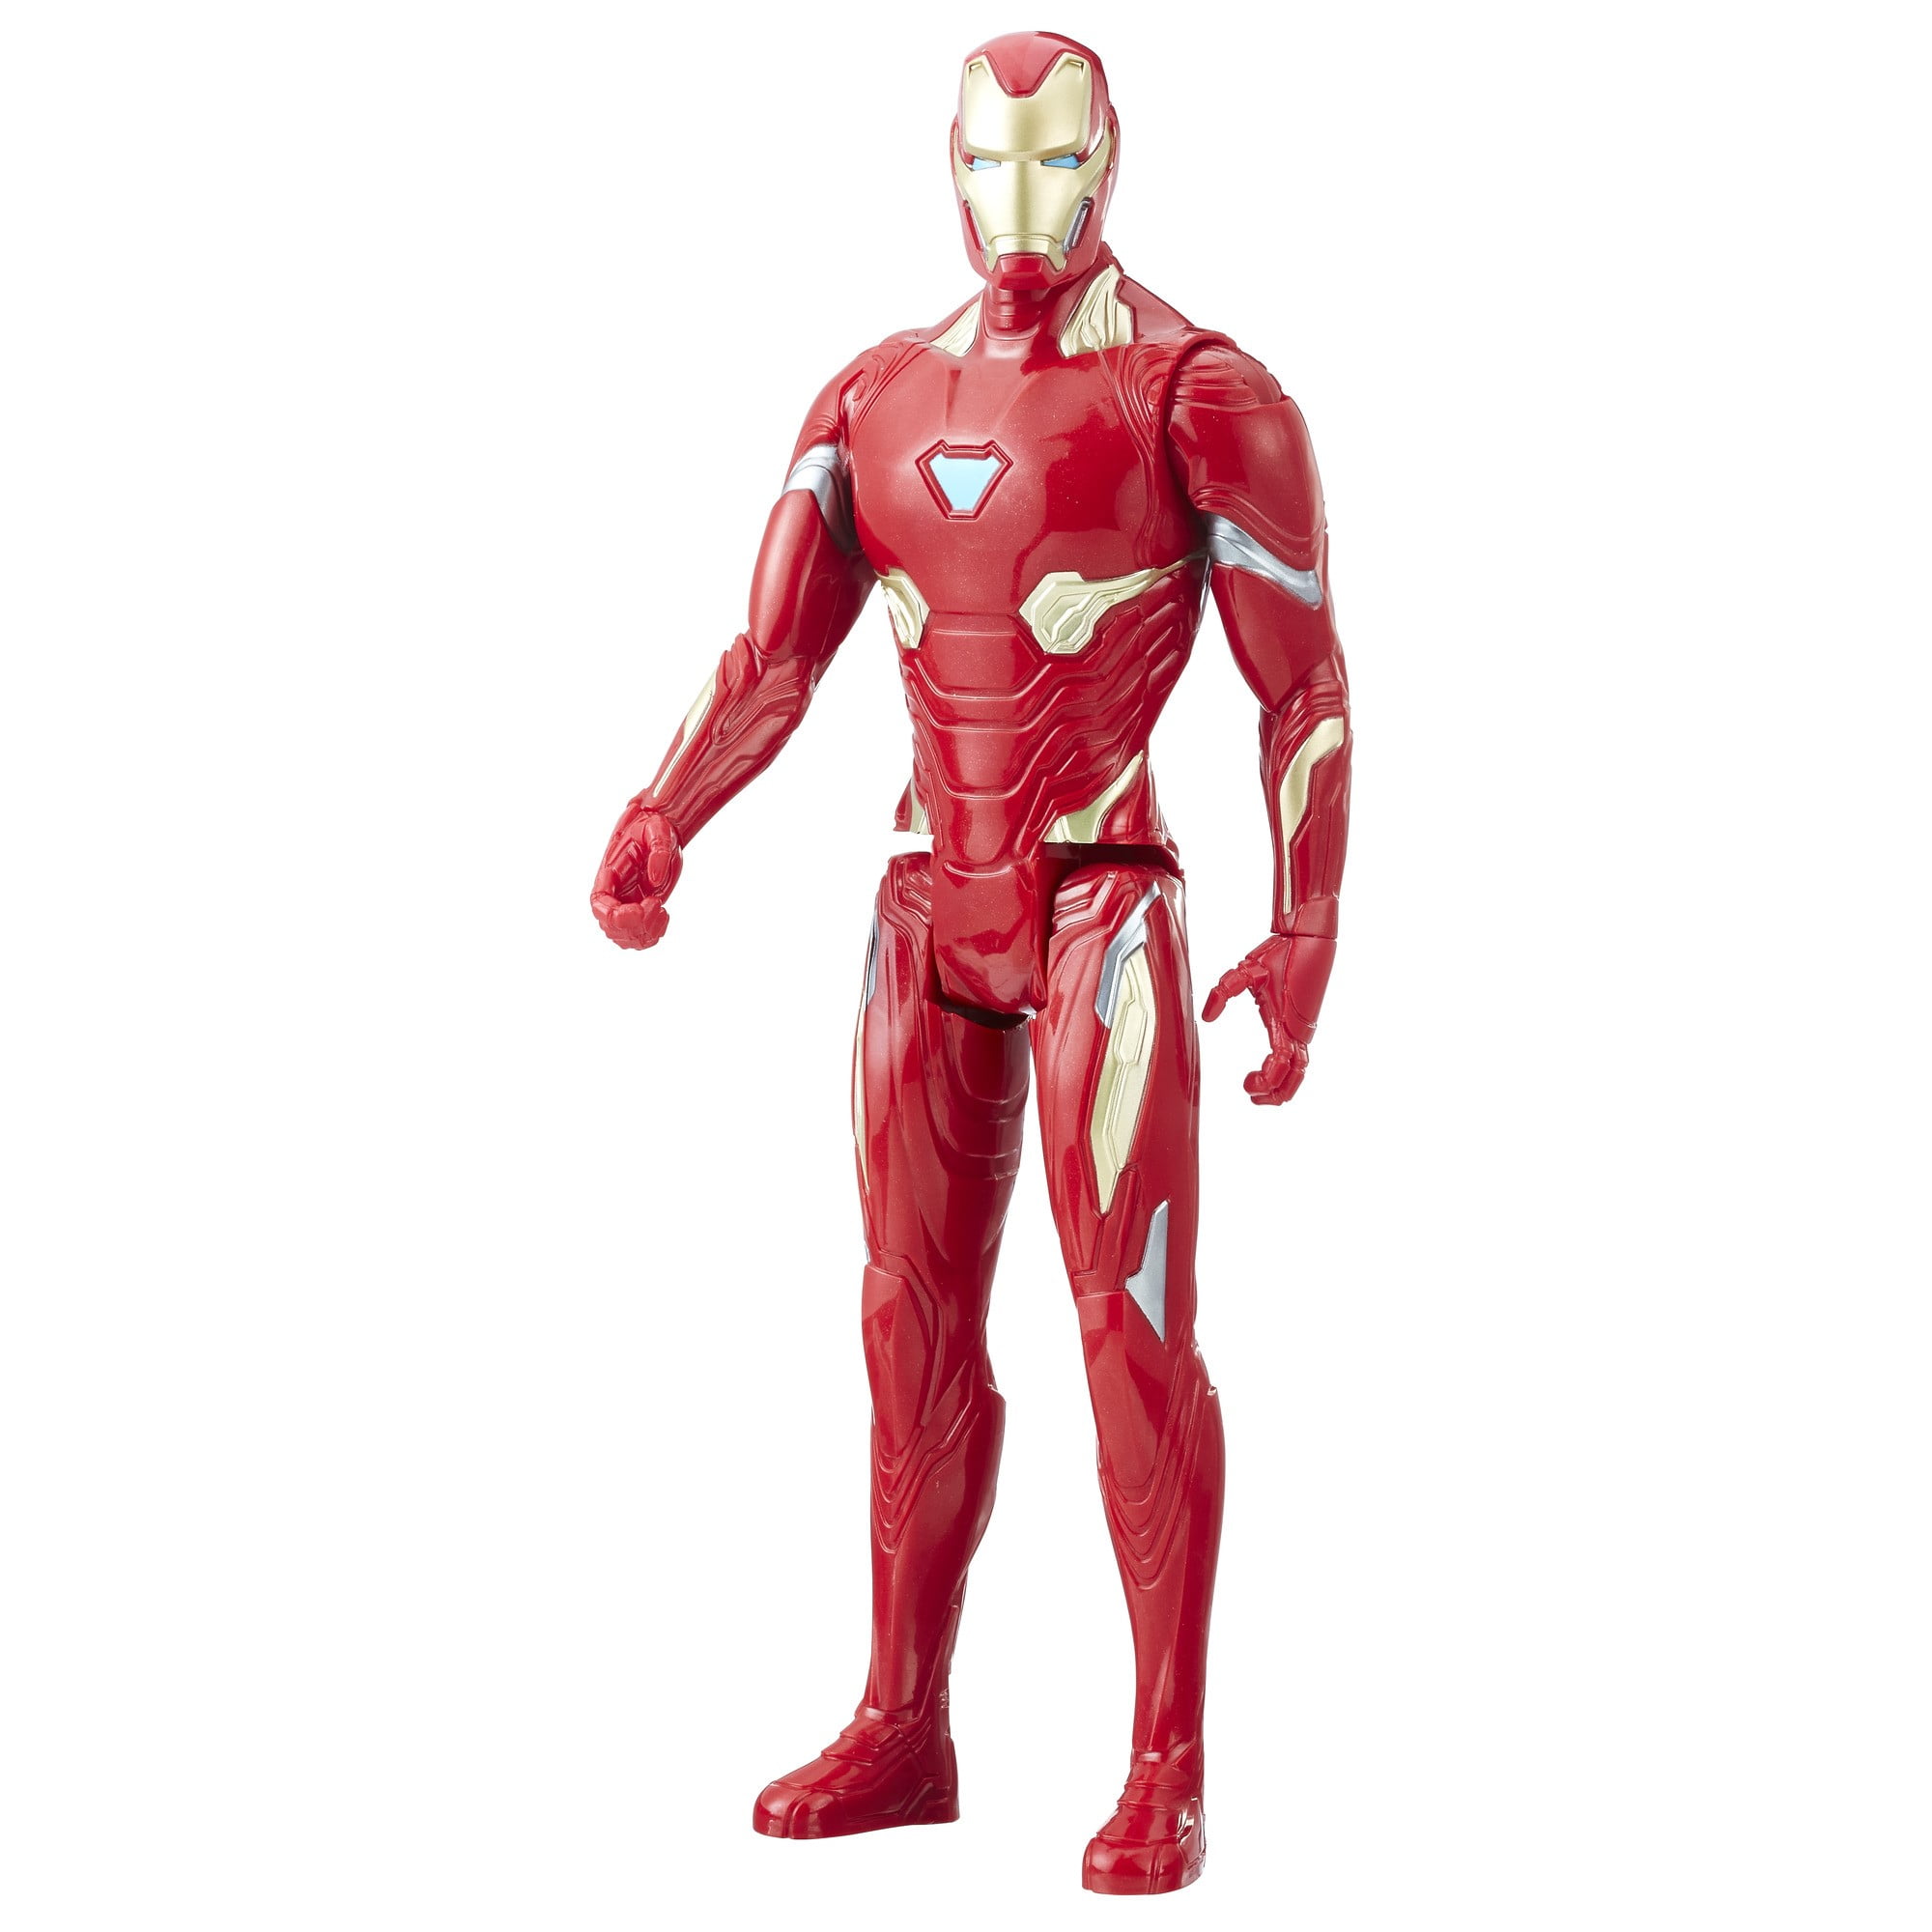 Avengers Marvel Captain America 6" Scale Marvel Super Hero Action Figure Toy 